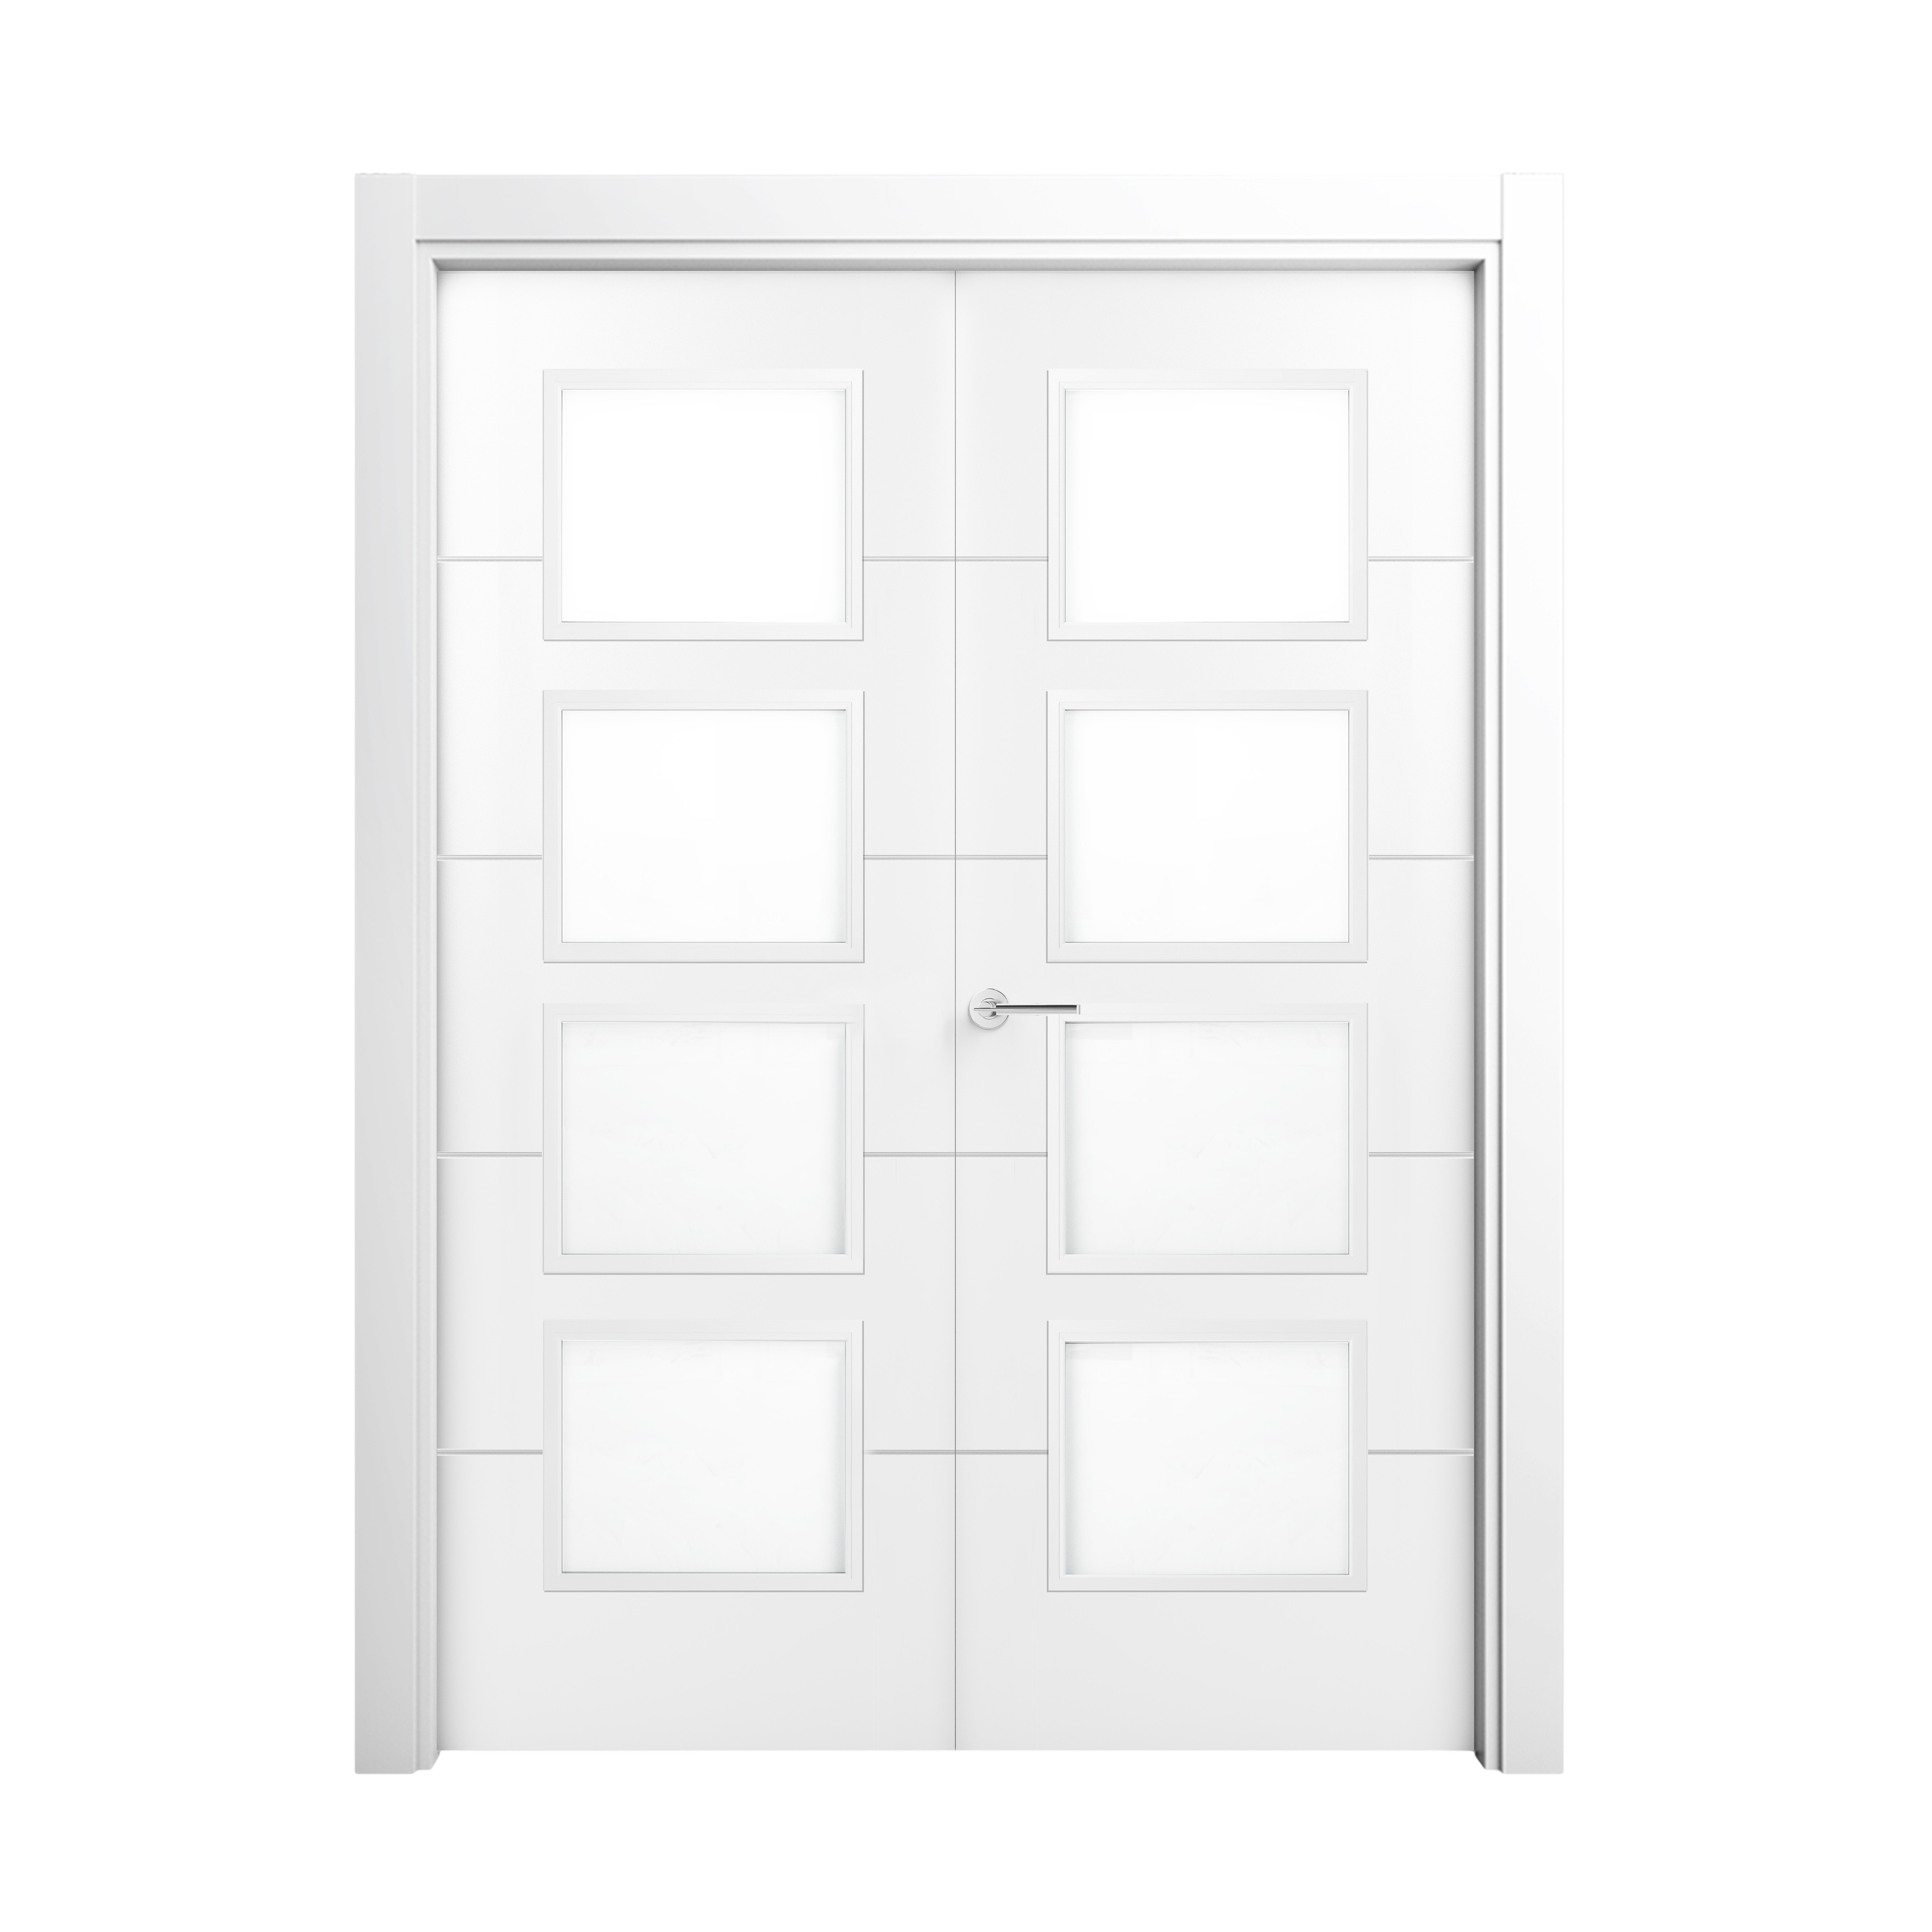 Puerta lucerna premium blanco apertura derecha con cristal 9x125cm